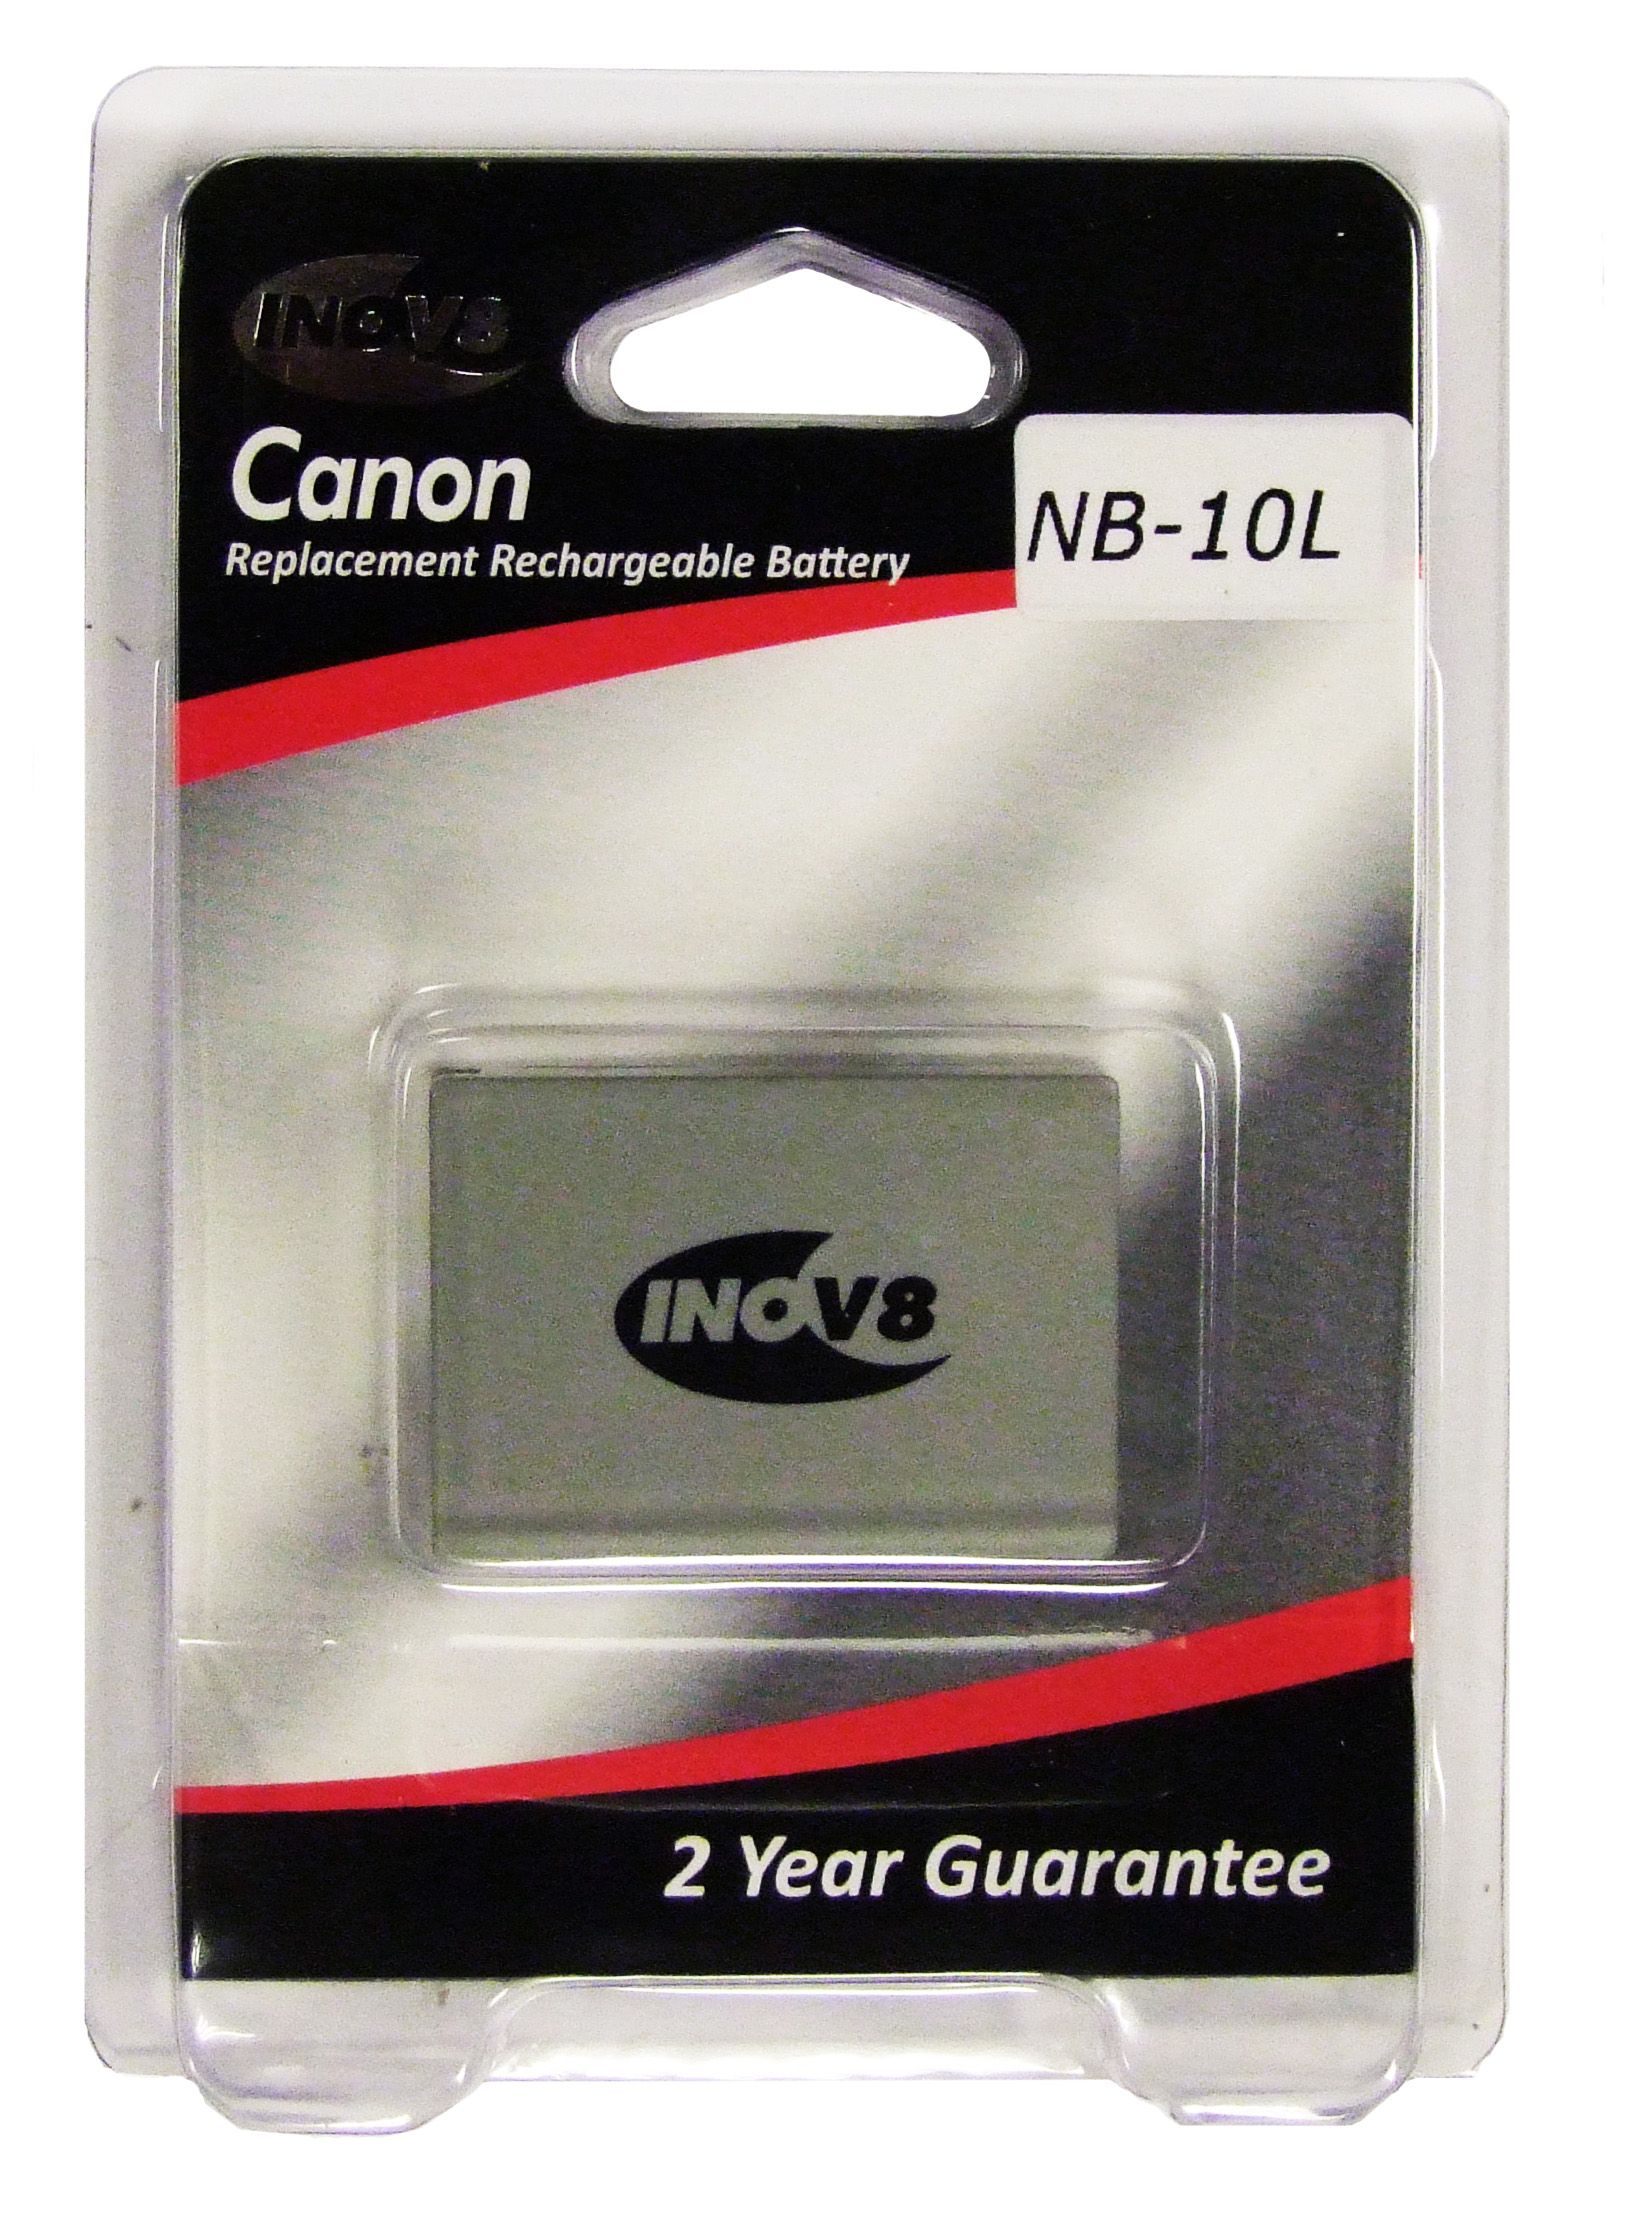 Inov8 Canon NB-10L Equivalent Digital Camera Battery